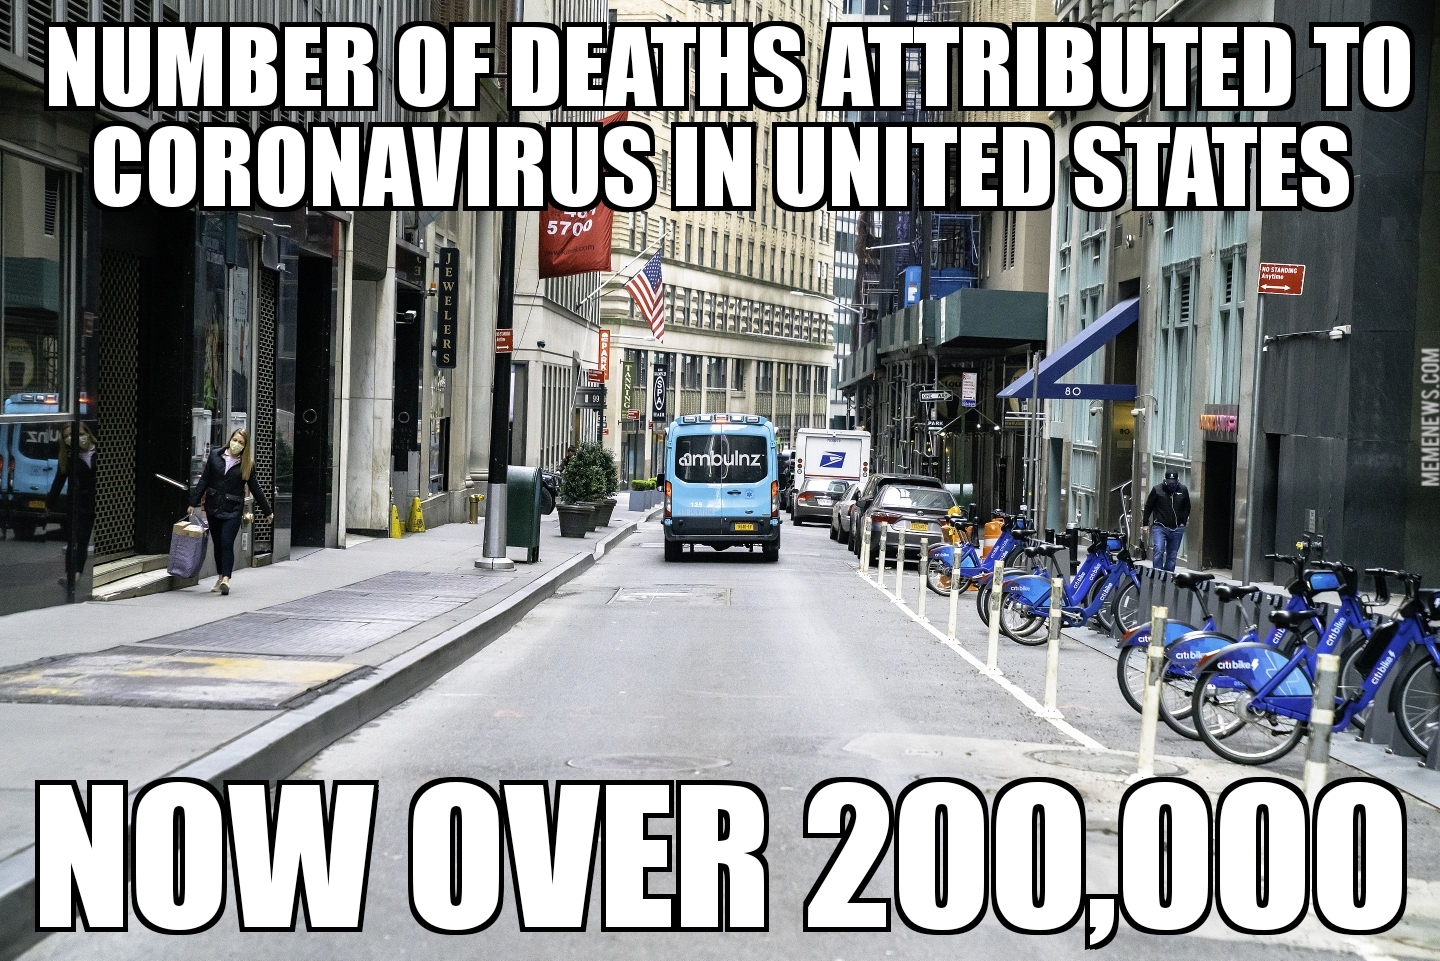 U.S. coronavirus deaths top 200,000